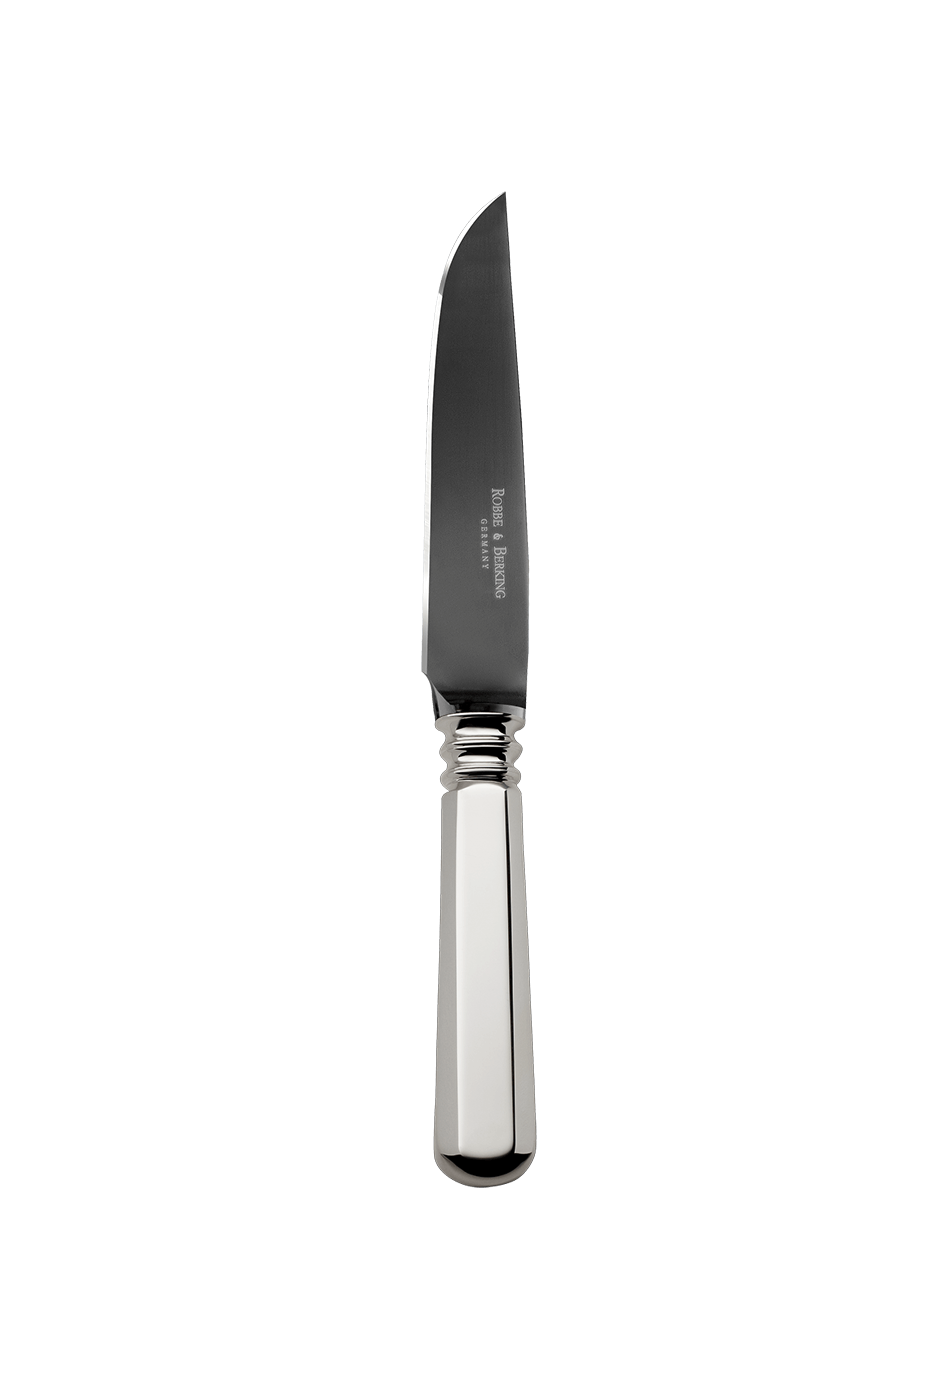 Alt-Spaten Steak Knife Frozen Black (150g massive silverplated)